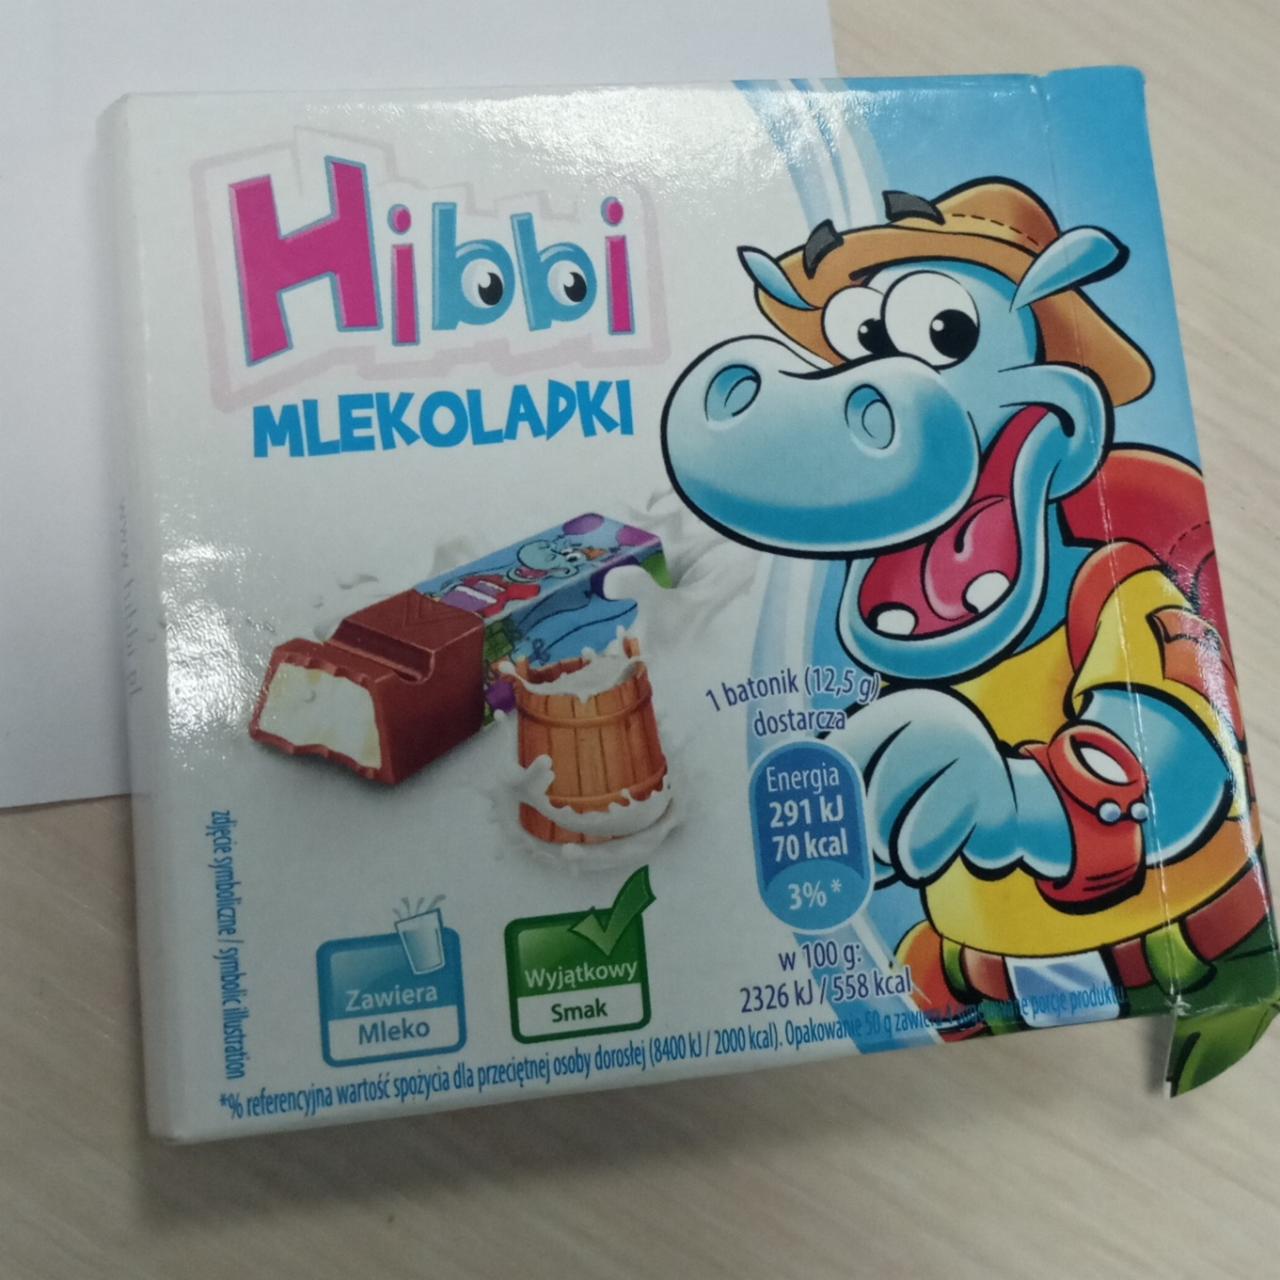 Фото - Молочный шоколад со сливочной начинкой Hibbi